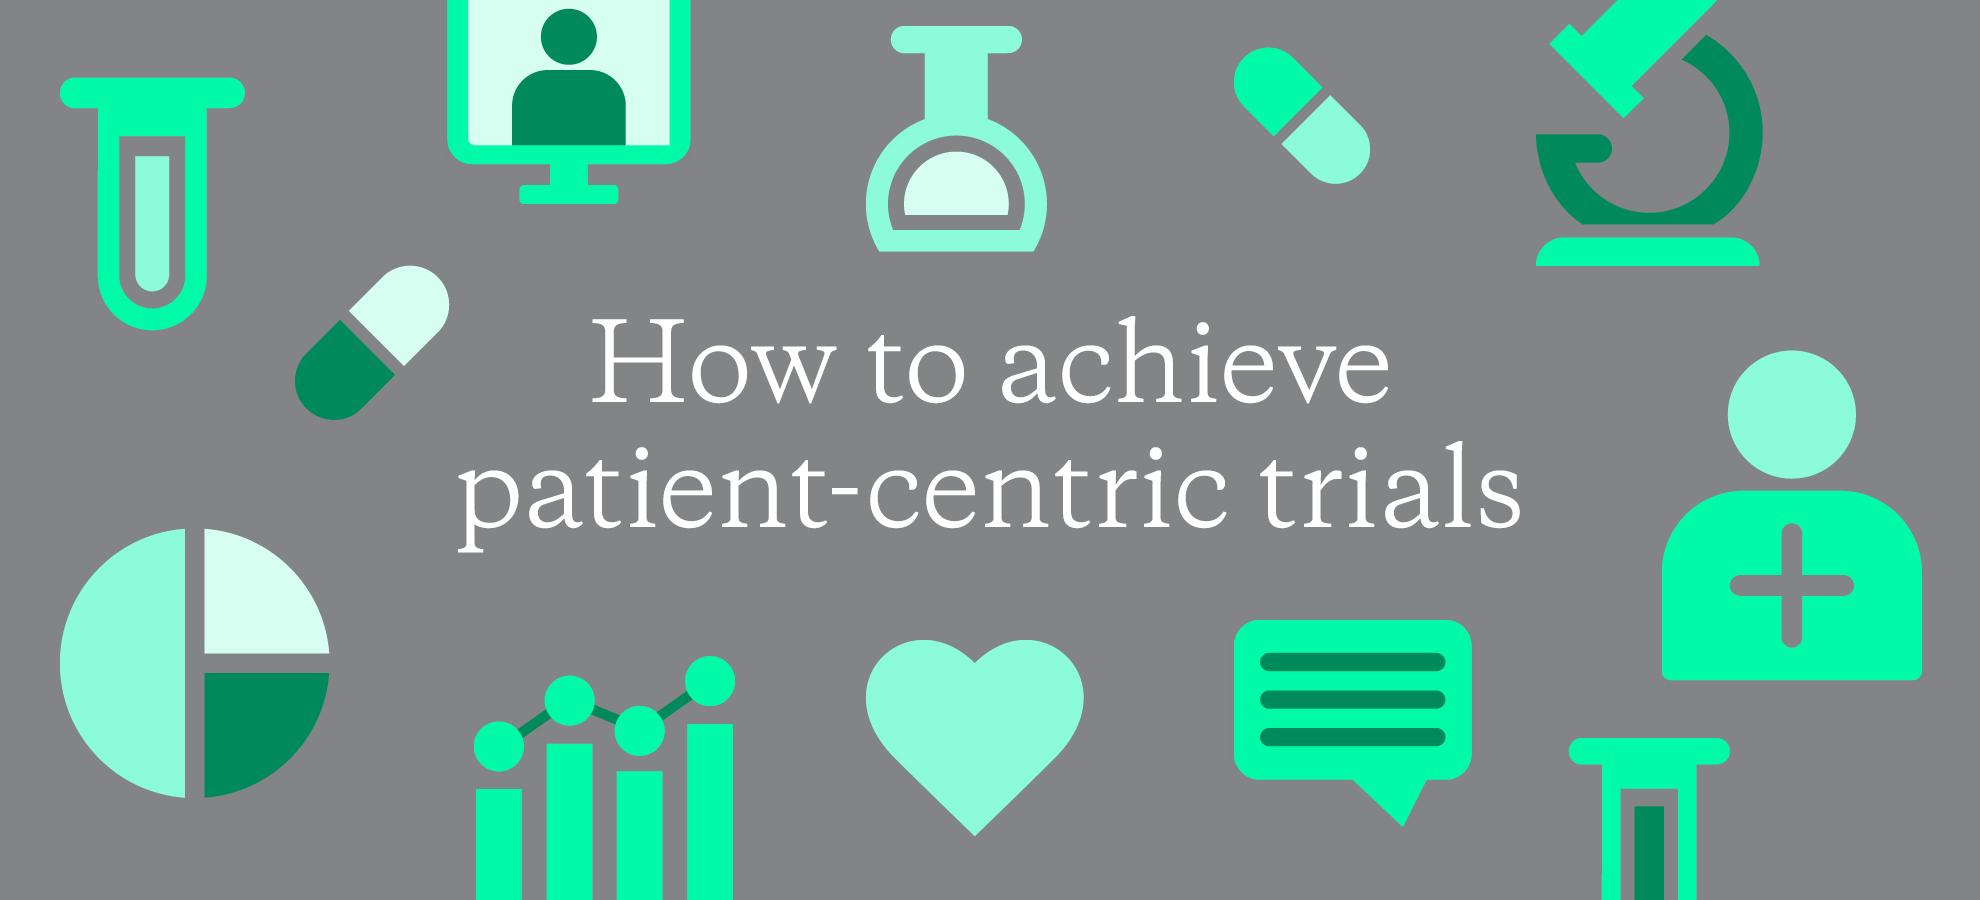 patient centric trials